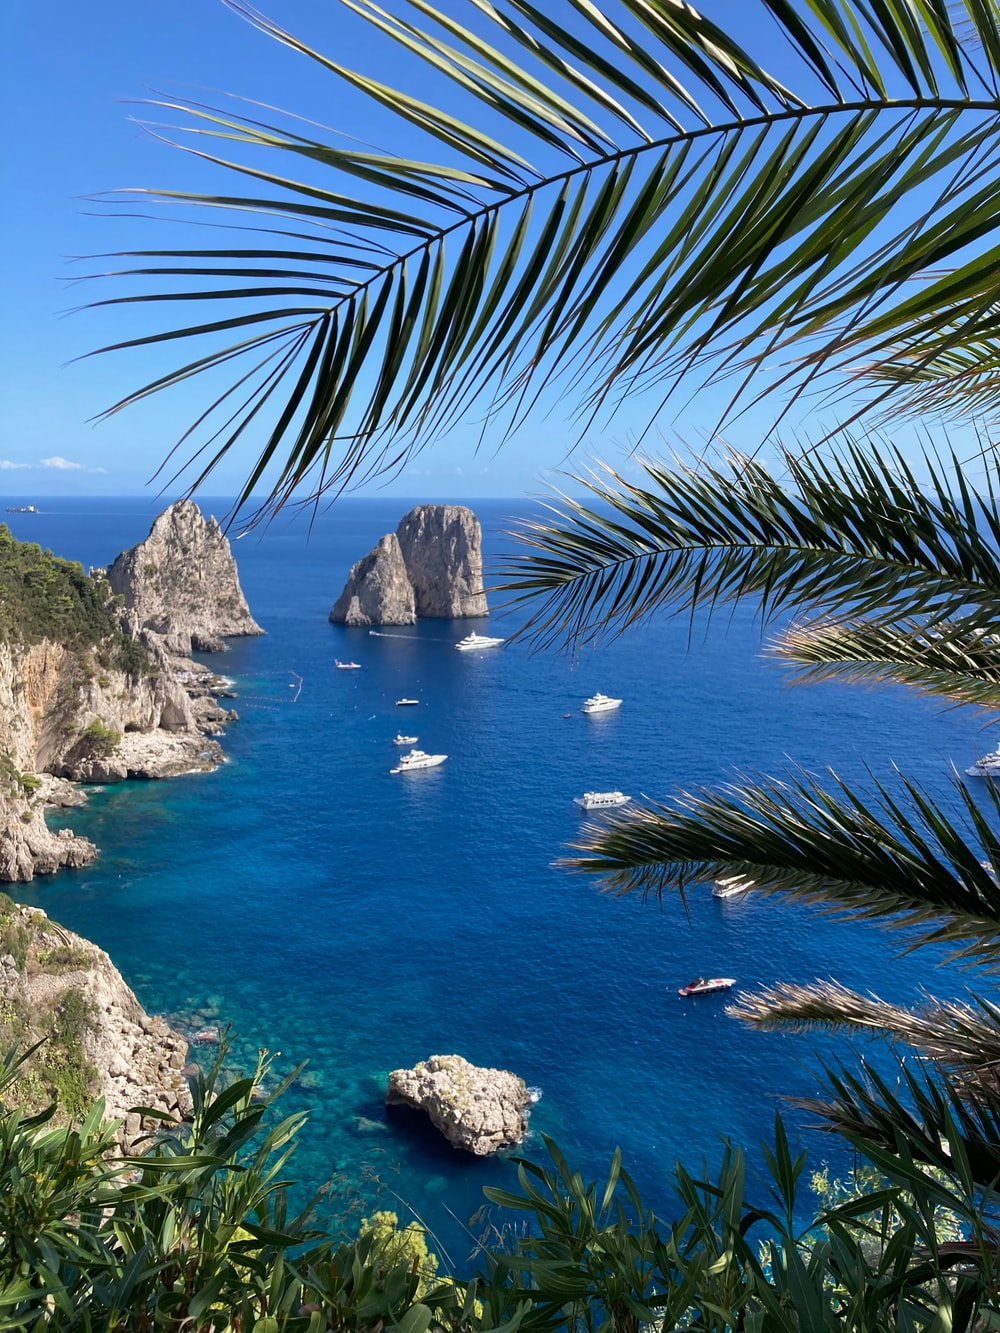 Capri, Italy Picture. Download Free Image